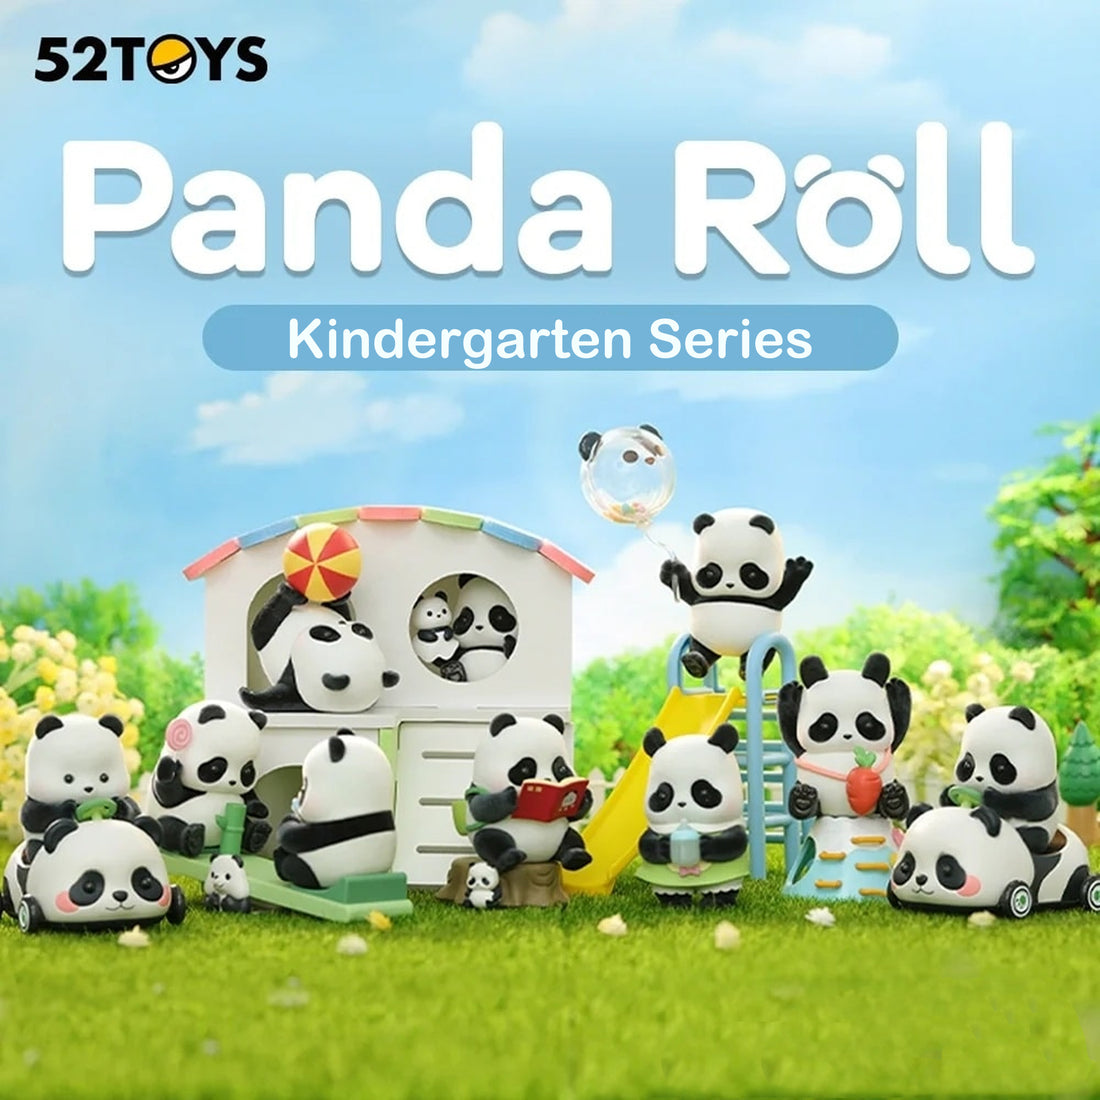 52TOYS PANDA ROLL Kindergarten Series Blind Box